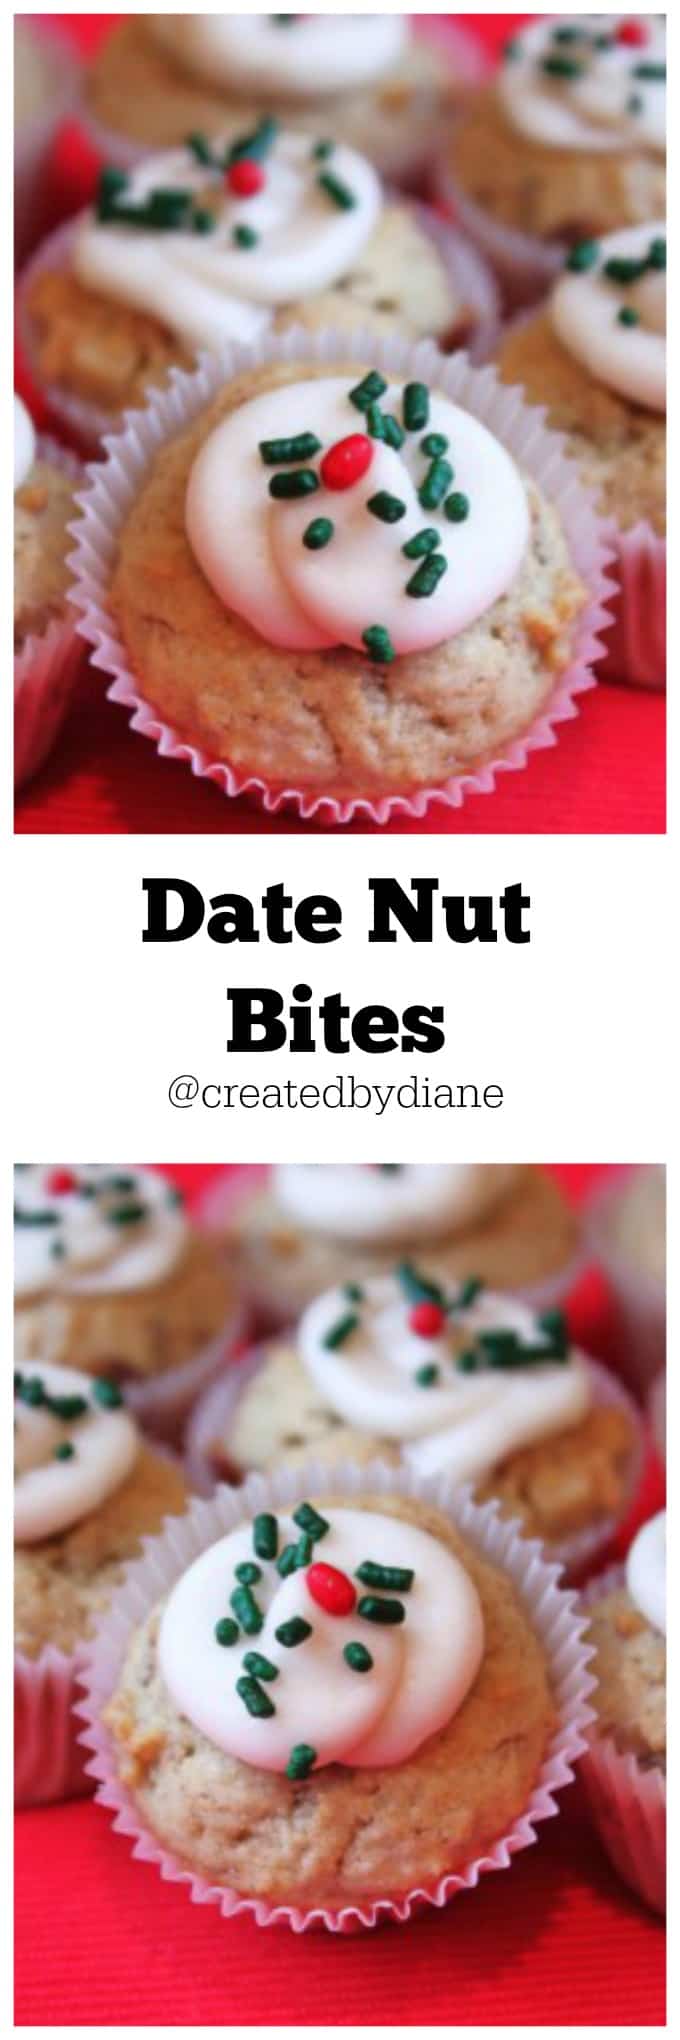 Date Nut Bites @createdbydiane